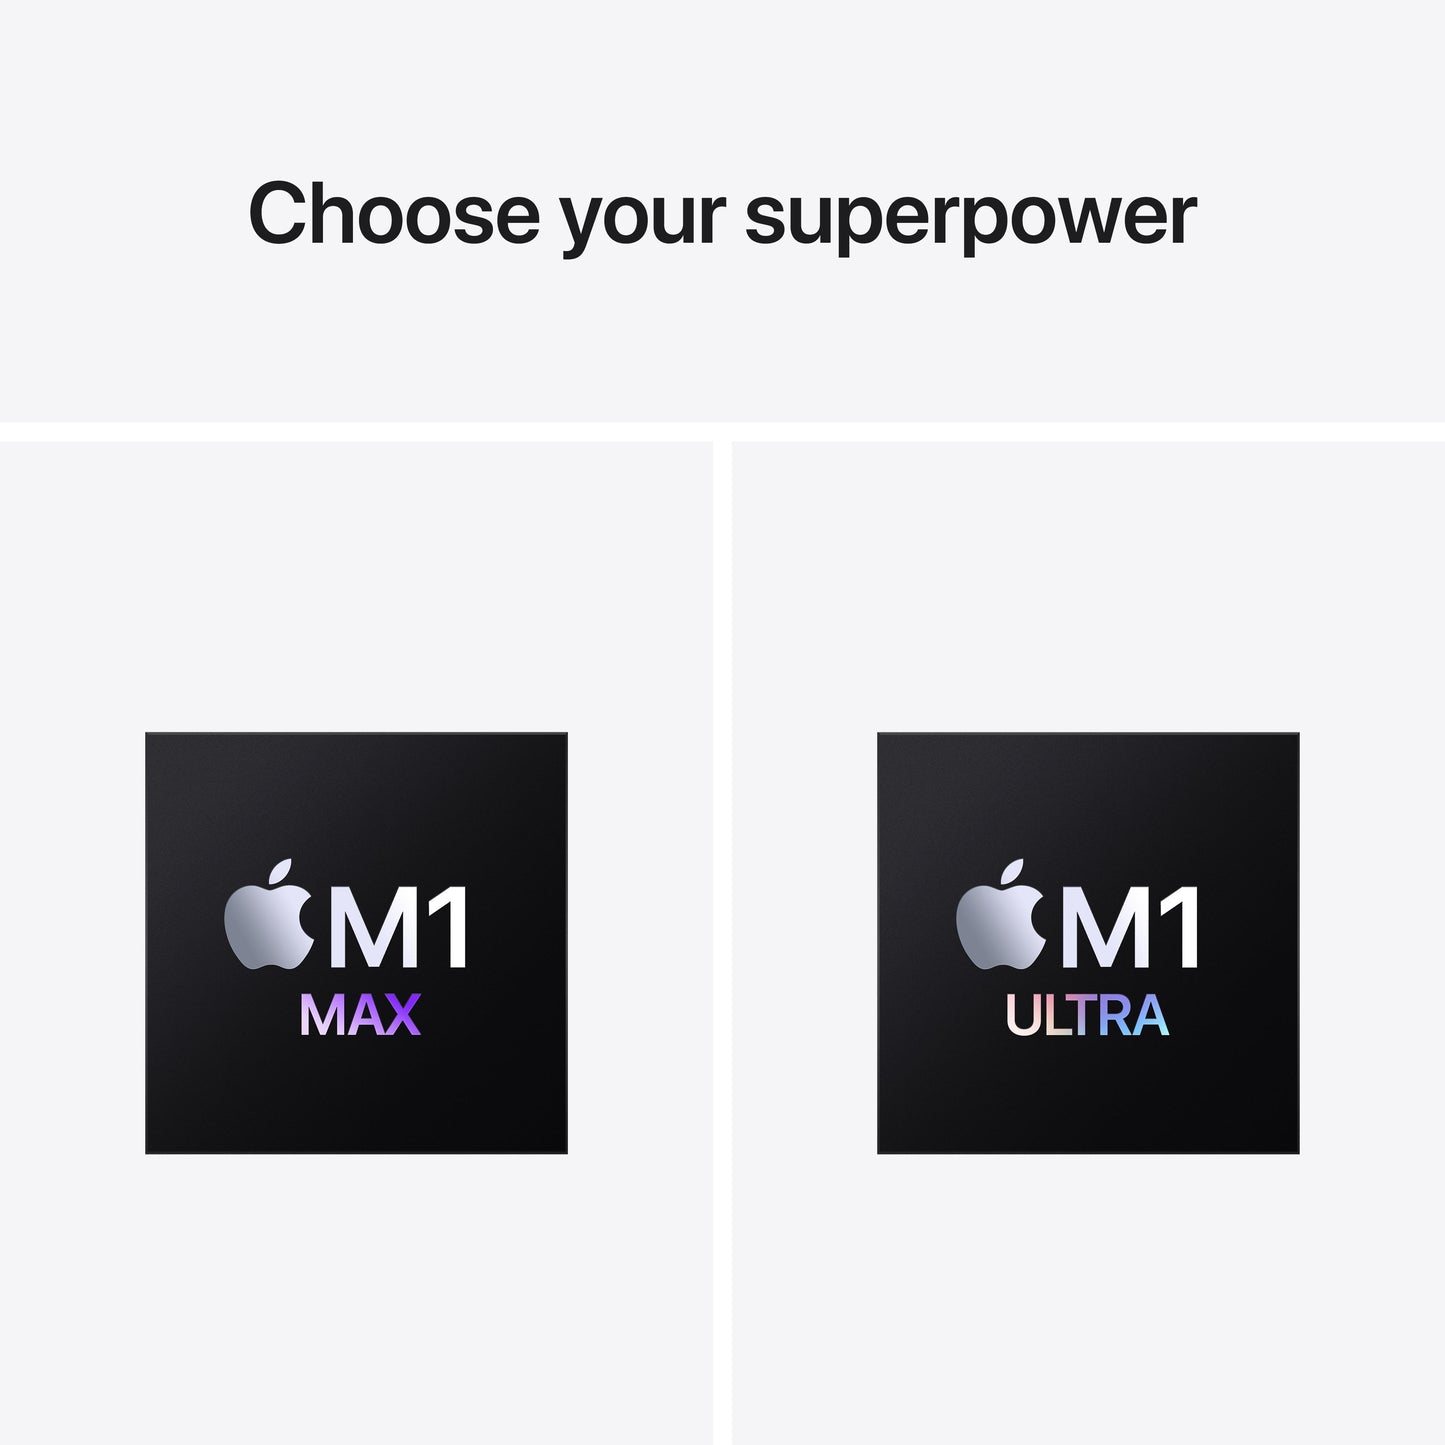 Mac Studio: Apple M1 Max chip with 10_core CPU and 24_core GPU, 512GB SSD